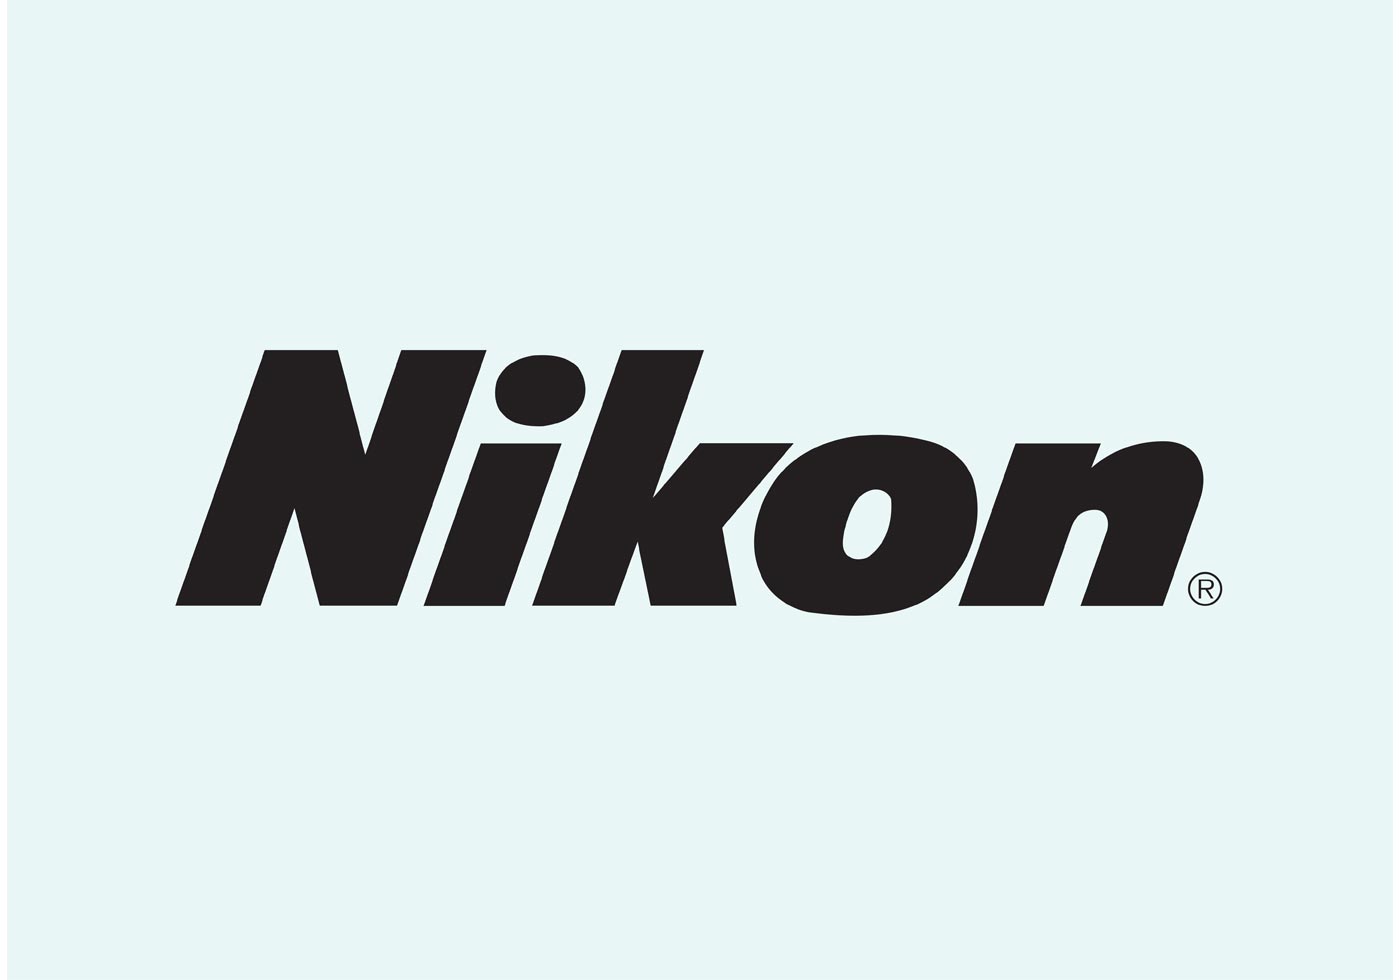 Nikon - Download Free Vector Art, Stock Graphics & Images